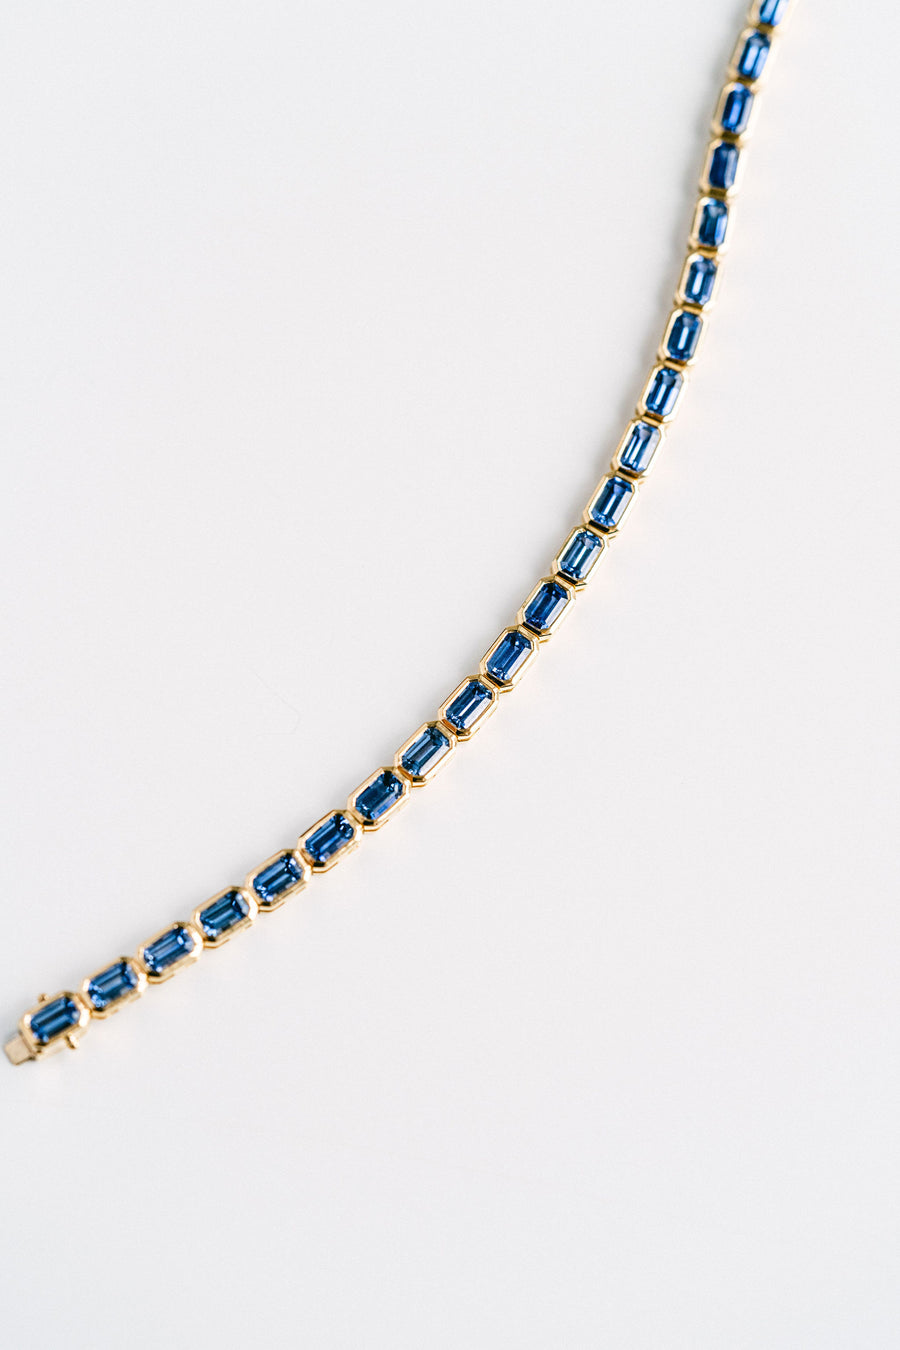 8.90ctw. Emerald Cut Blue Sri Lankan Sapphire East-West Bezel Tennis Bracelet, 14k Yellow Gold